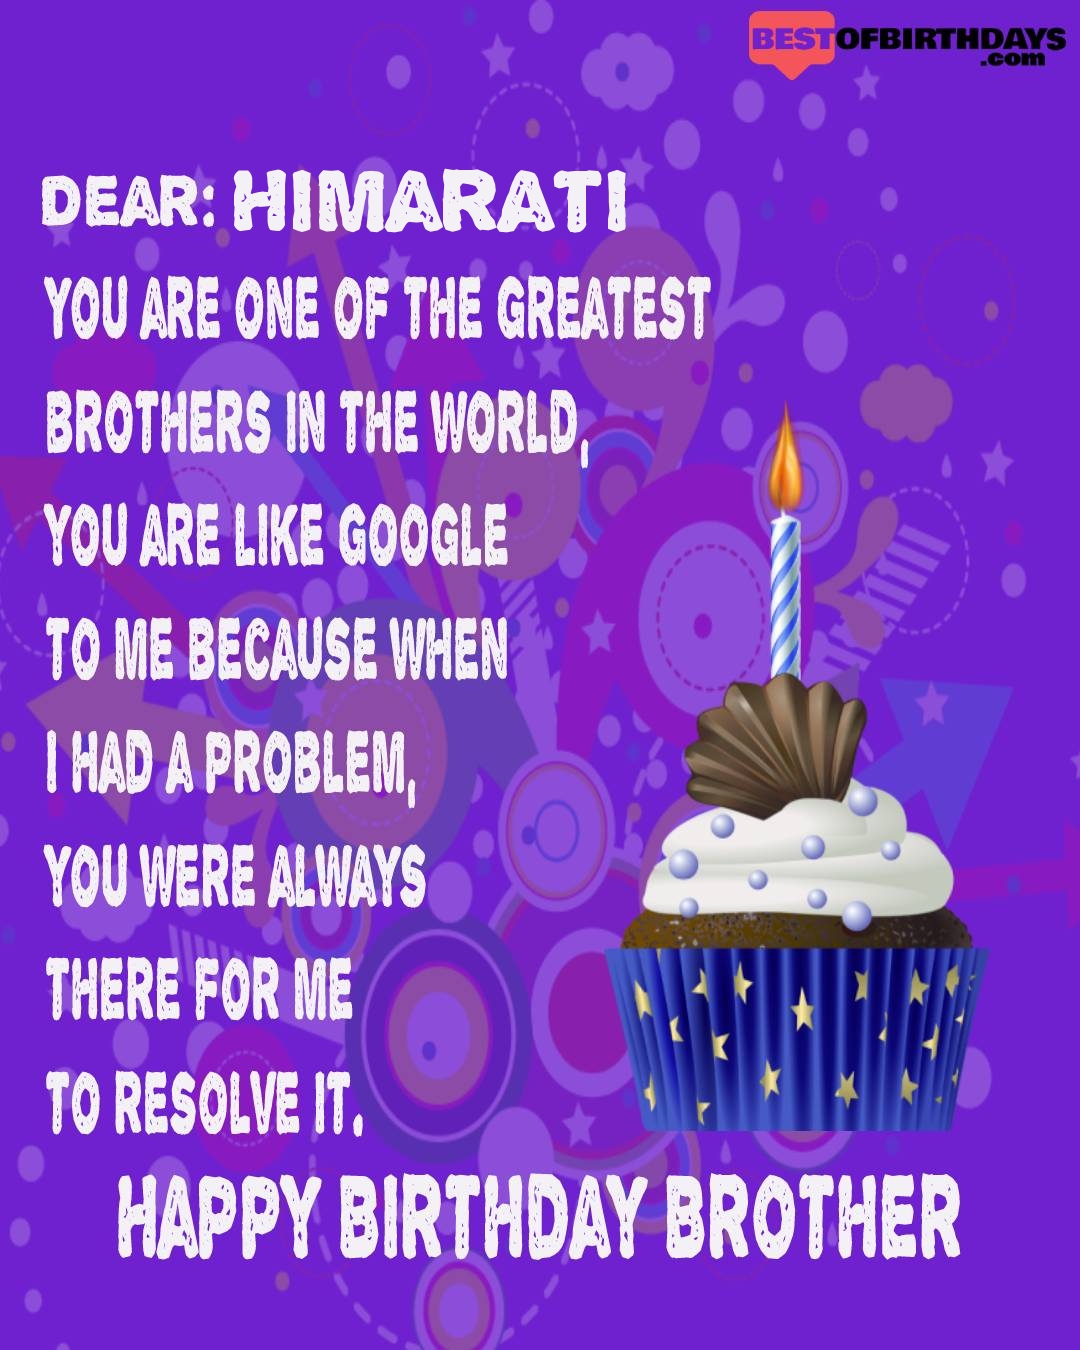 Happy birthday himarati bhai brother bro